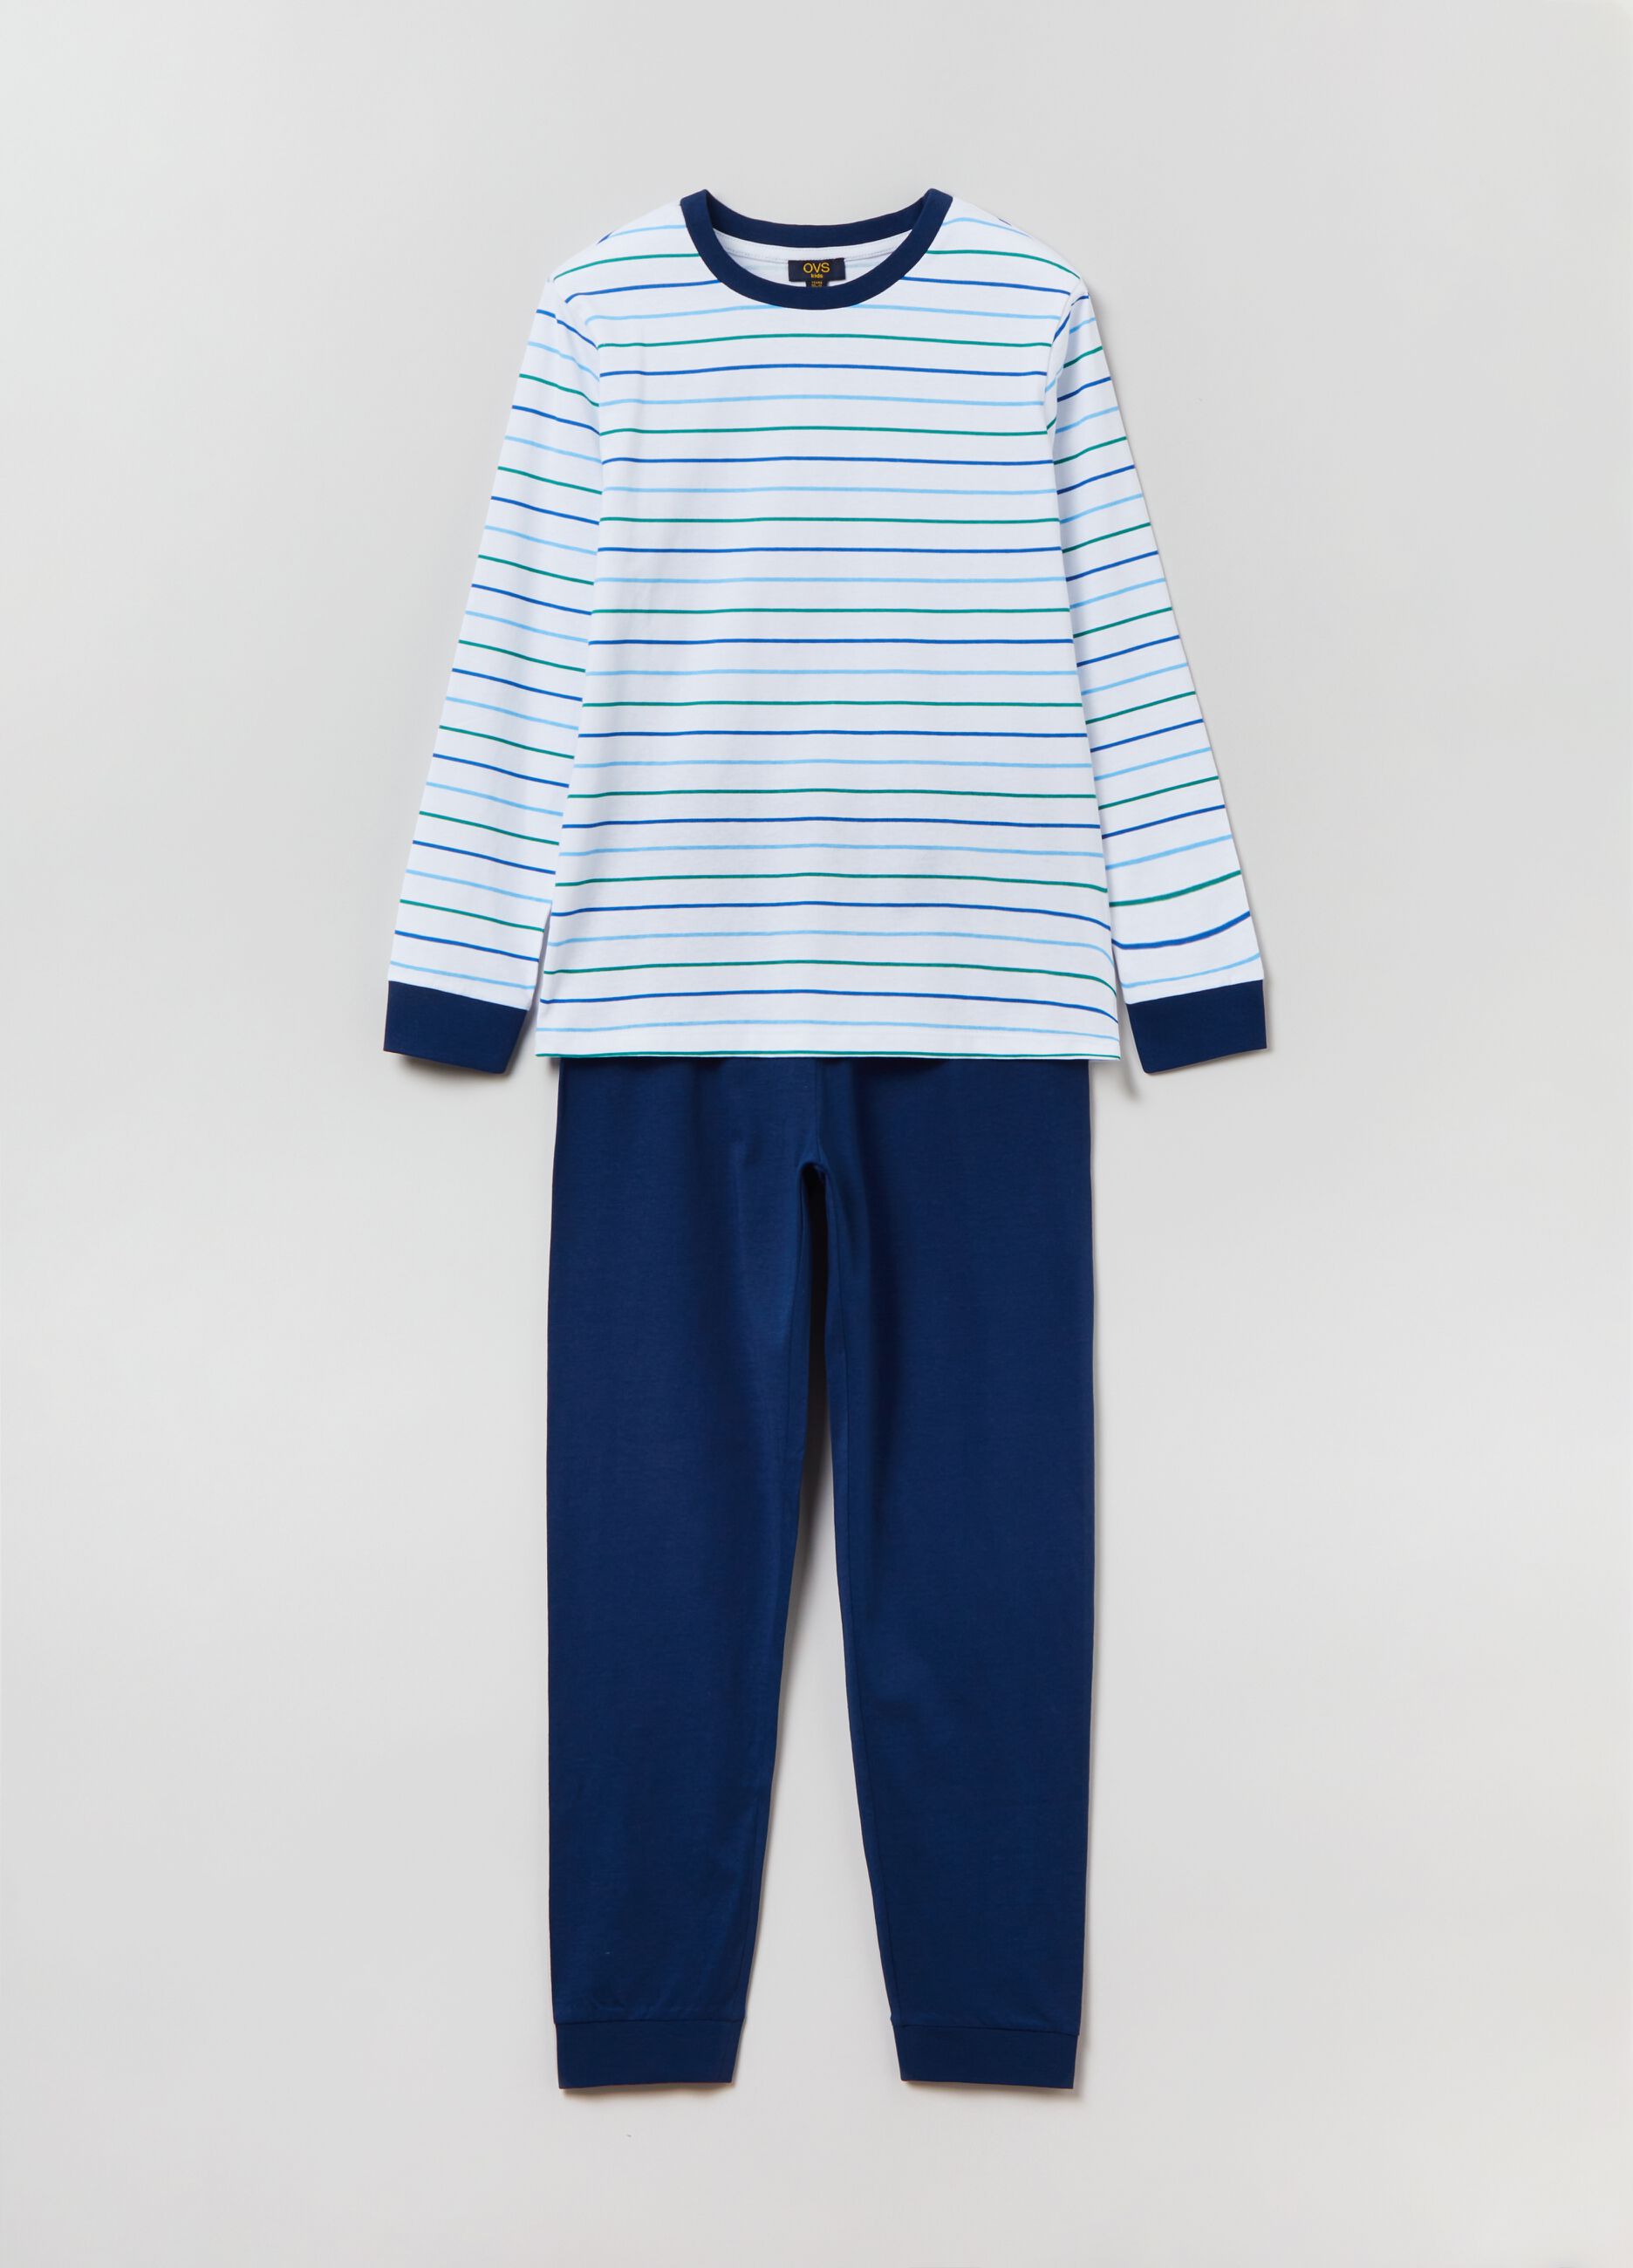 Long cotton pyjamas with striped top